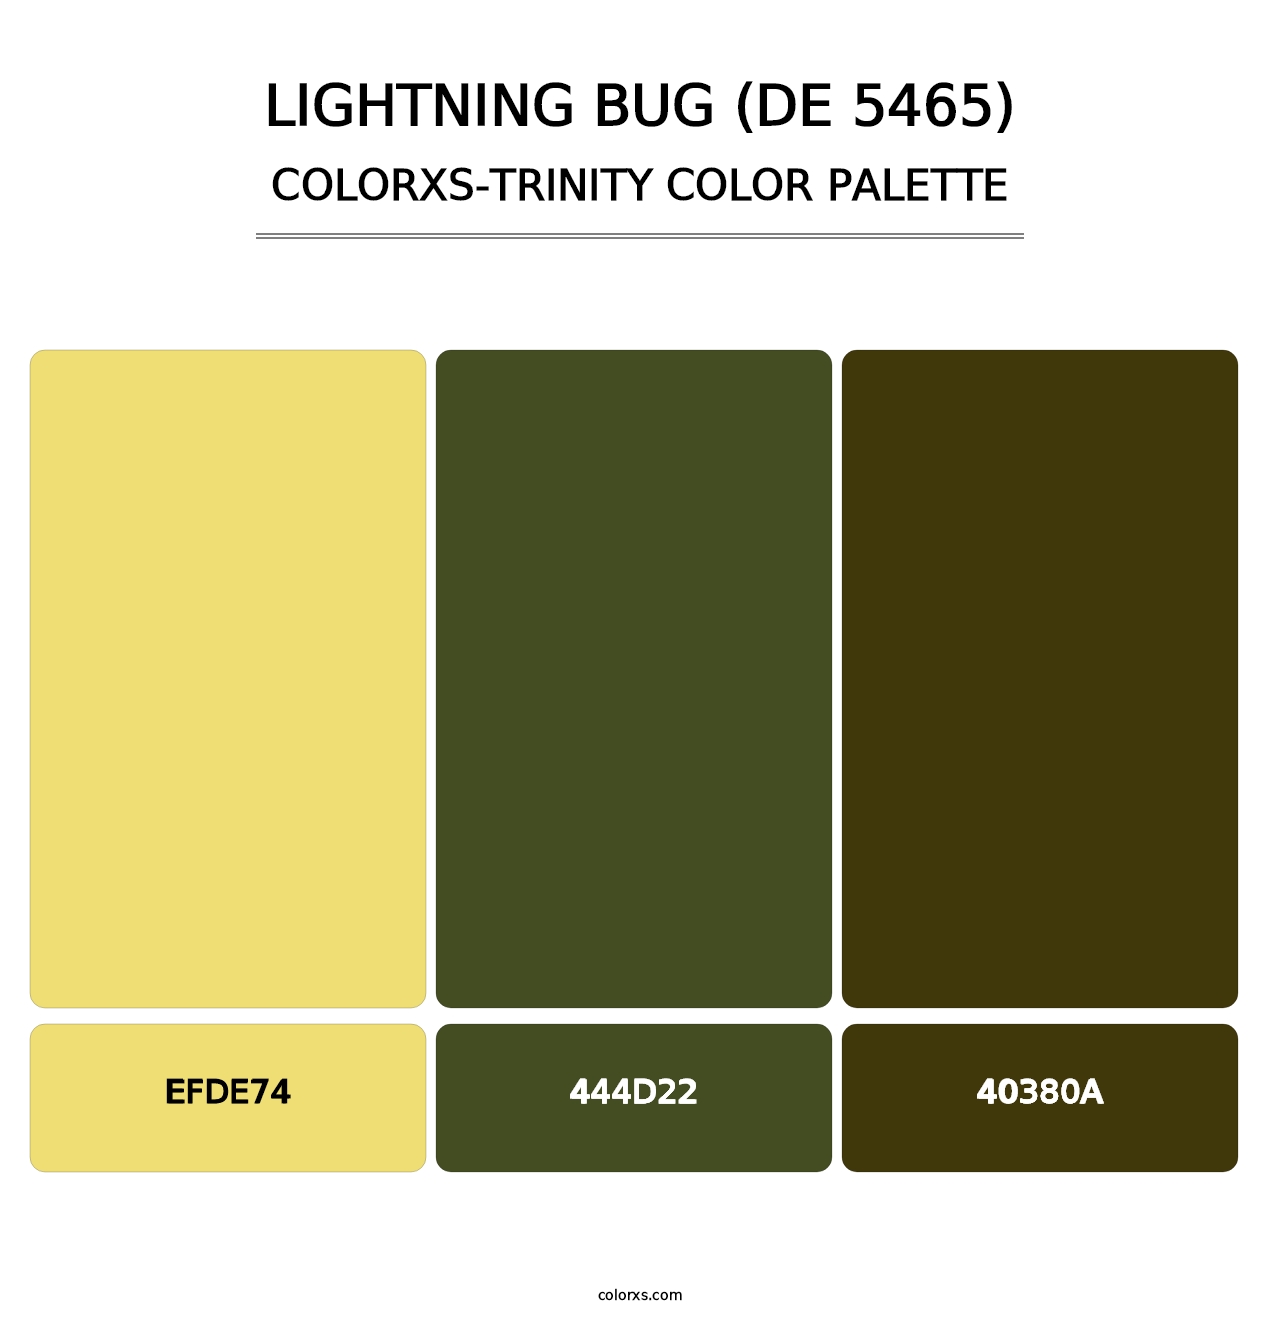 Lightning Bug (DE 5465) - Colorxs Trinity Palette